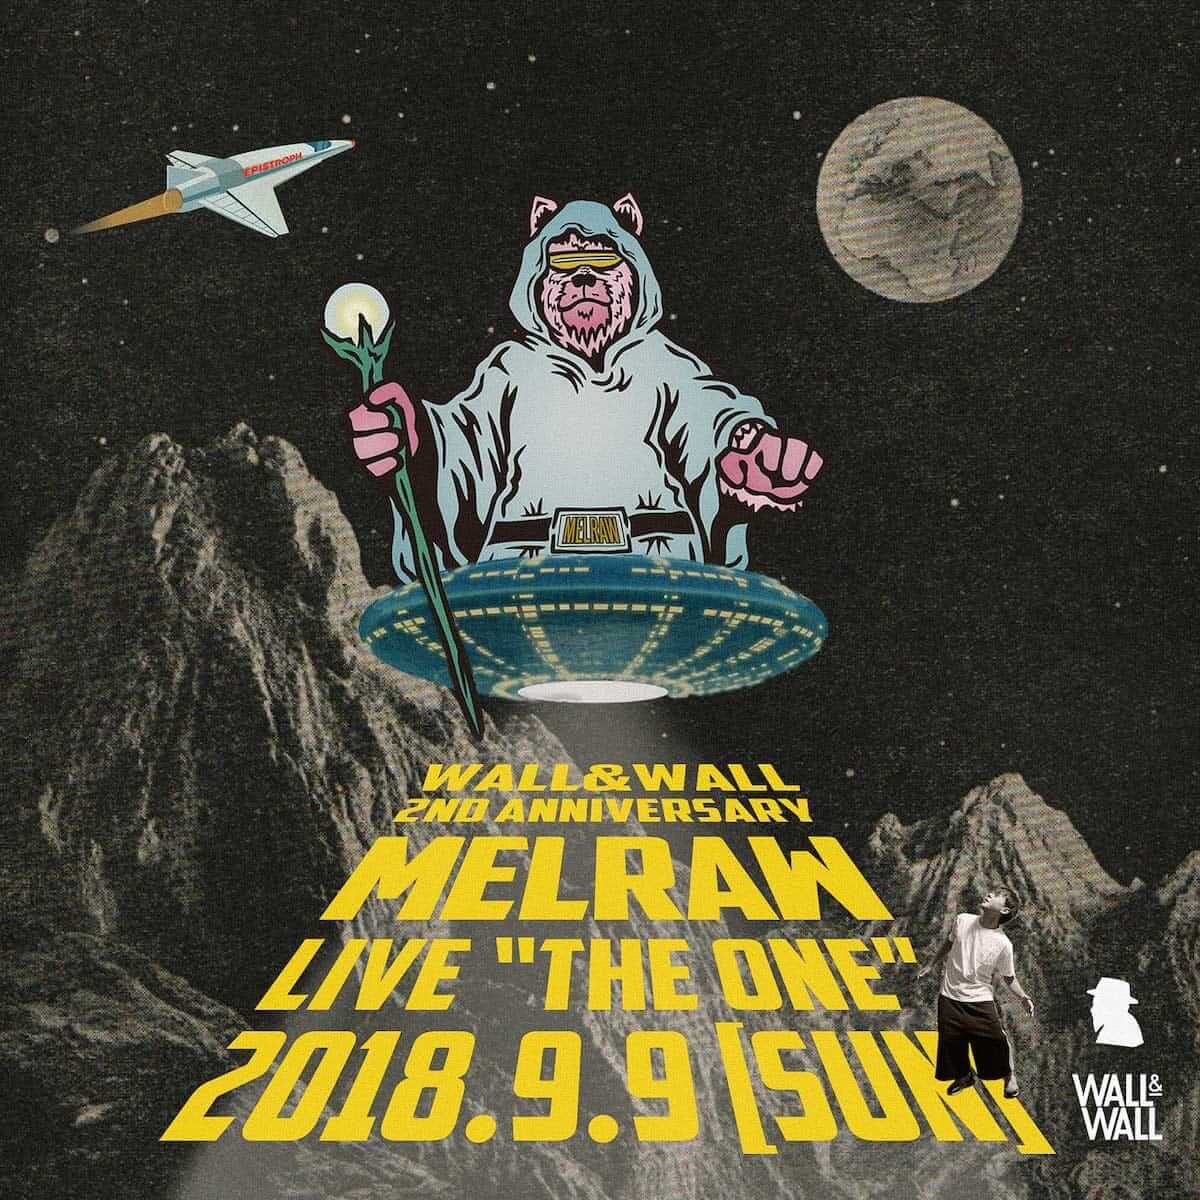 MELRAW待望のワンマンライブが9月に開催｜WALL＆WALLの2周年を祝うスペシャル公演の第1弾 music180716-wallwall-2nd-anniversary-melraw-live-one-2-1200x1200